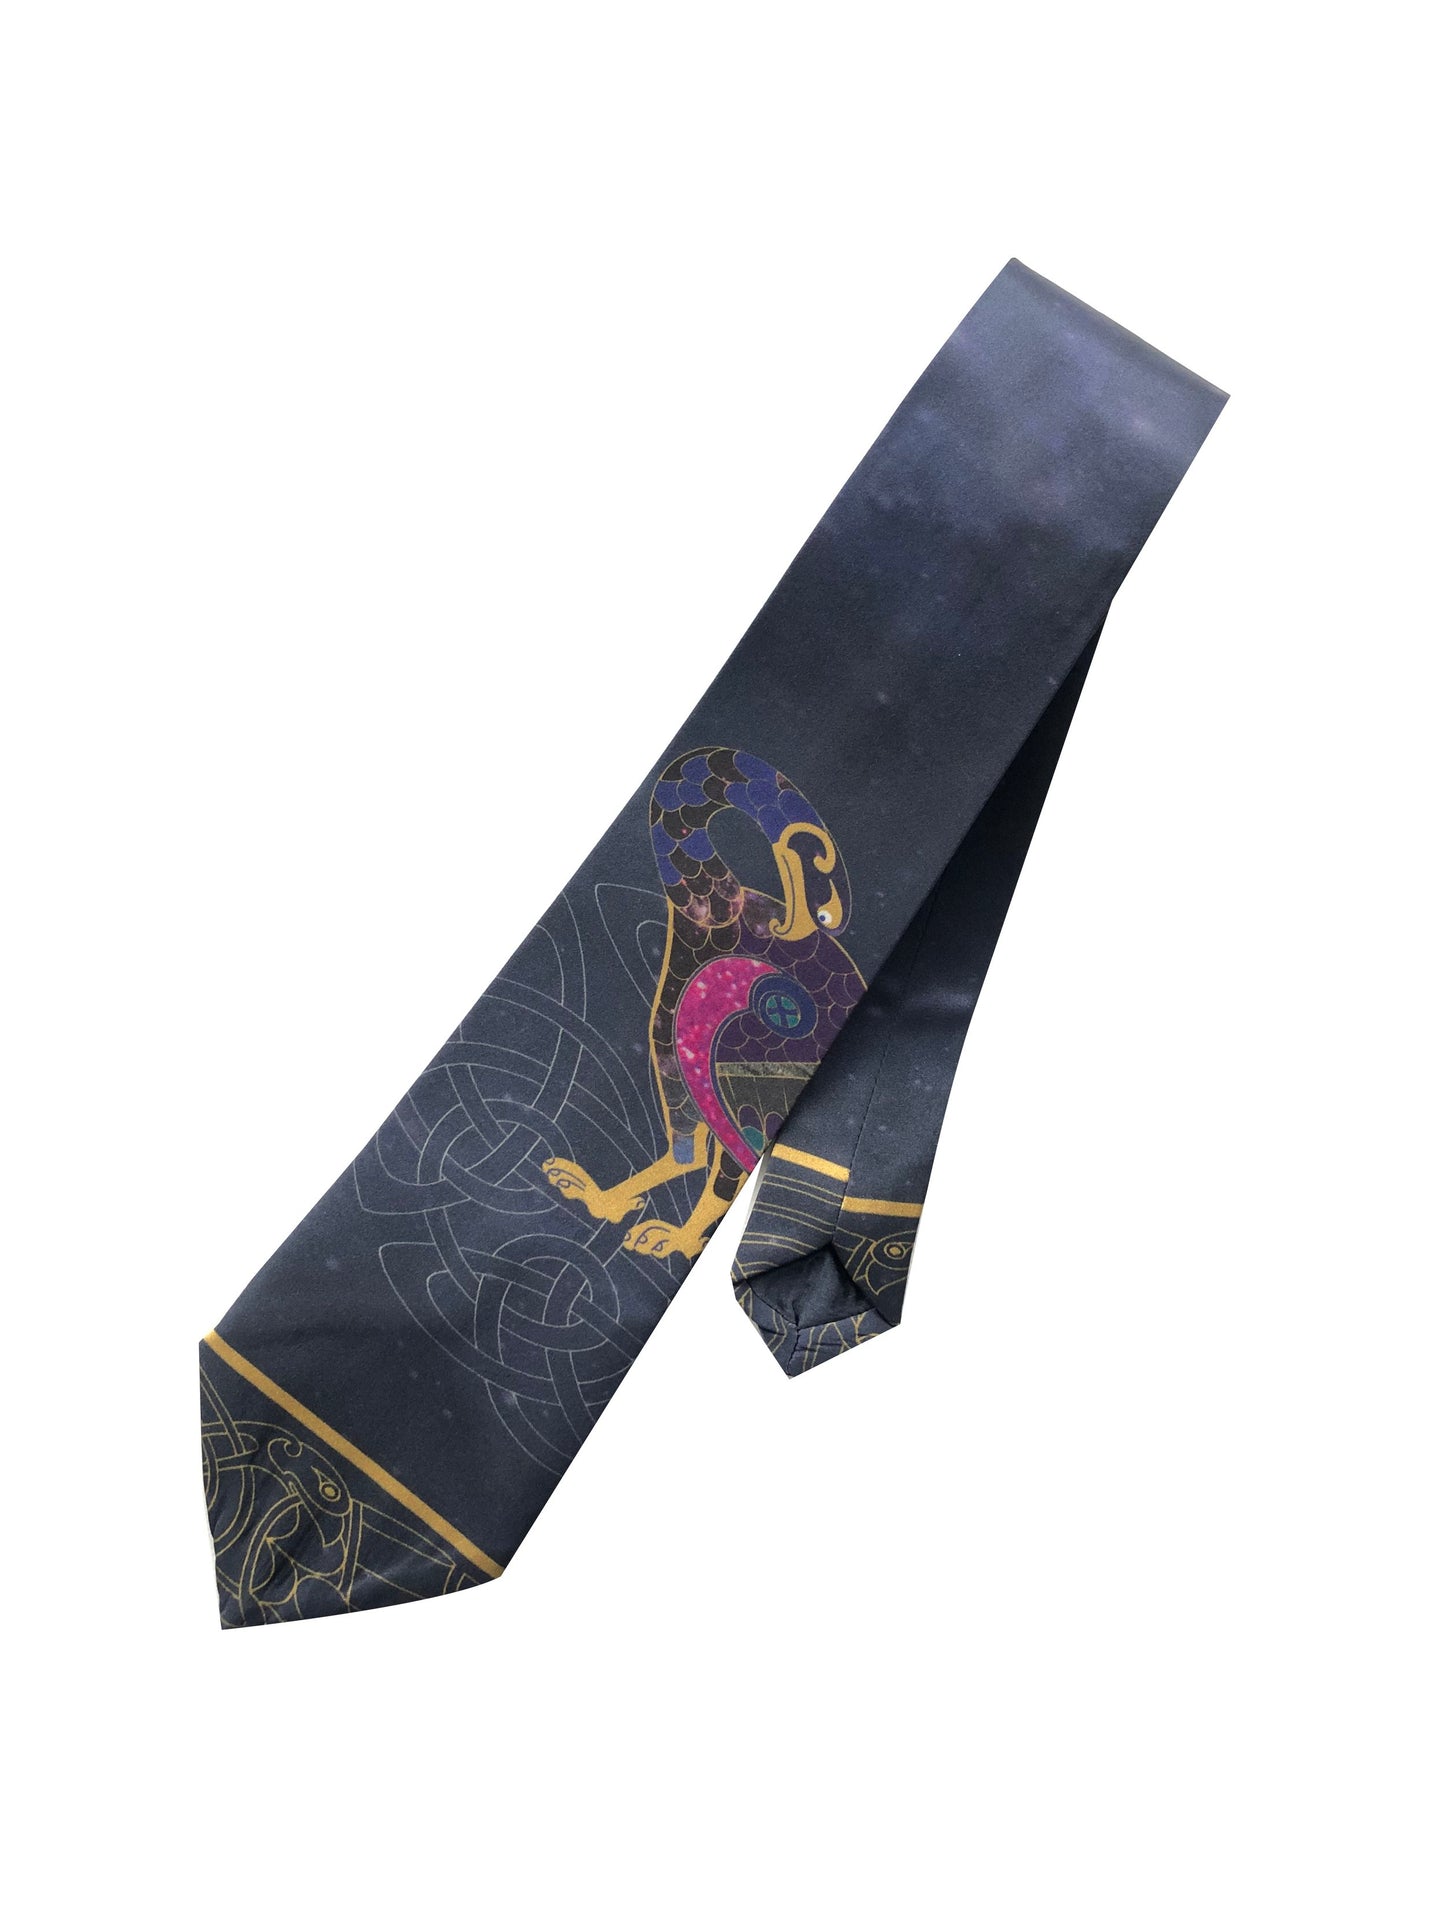 Kells Mythology Silk Tie - Made to Order